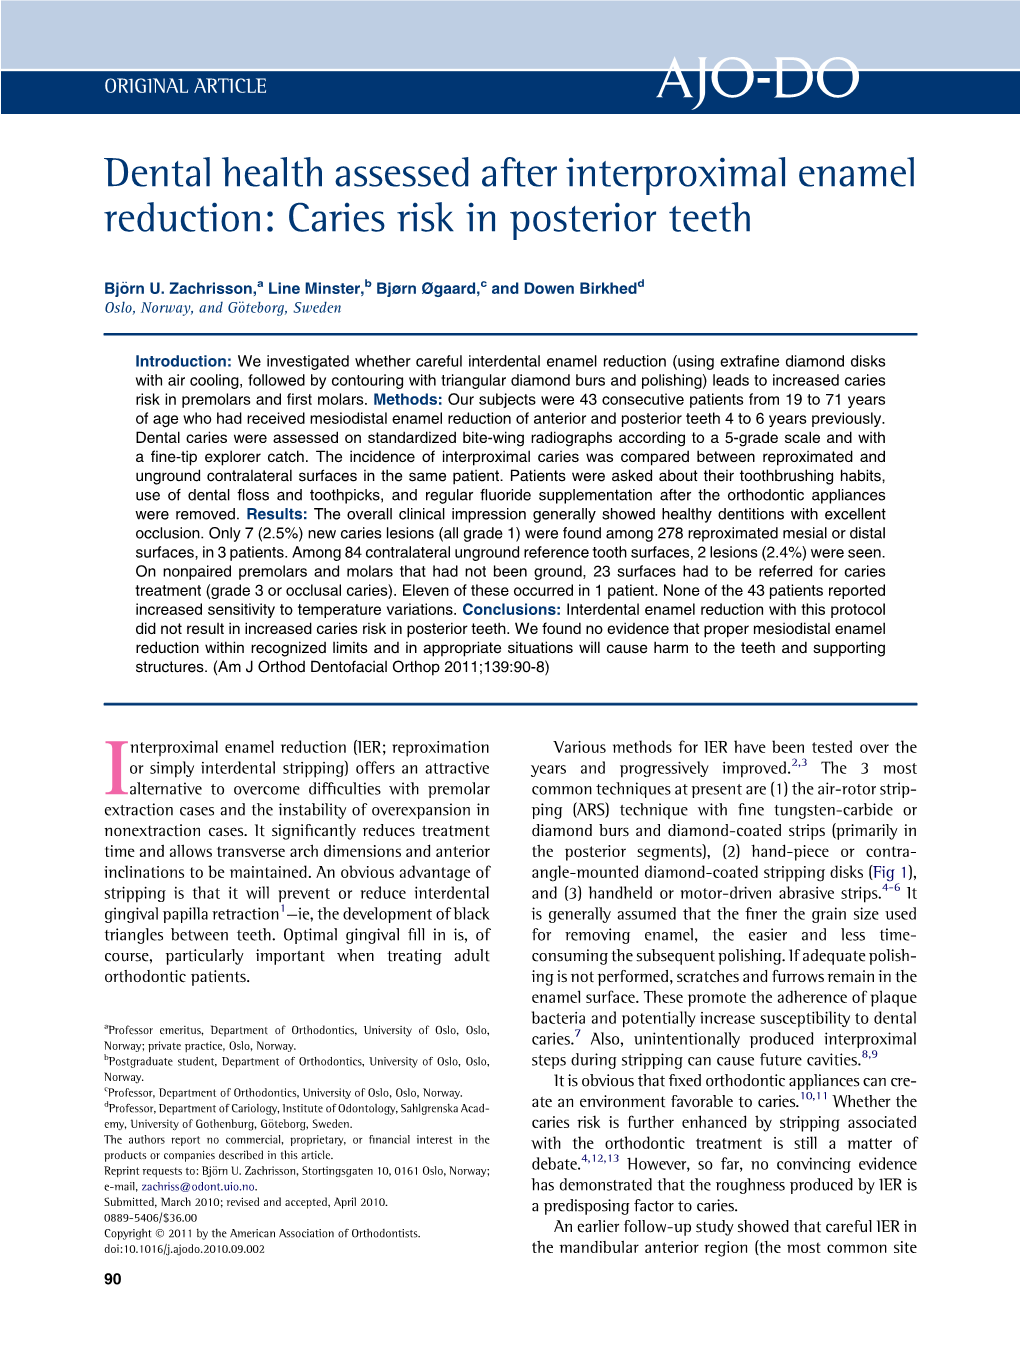 Dental Health Assessed After Interproximal Enamel Reduction: Caries Risk in Posterior Teeth